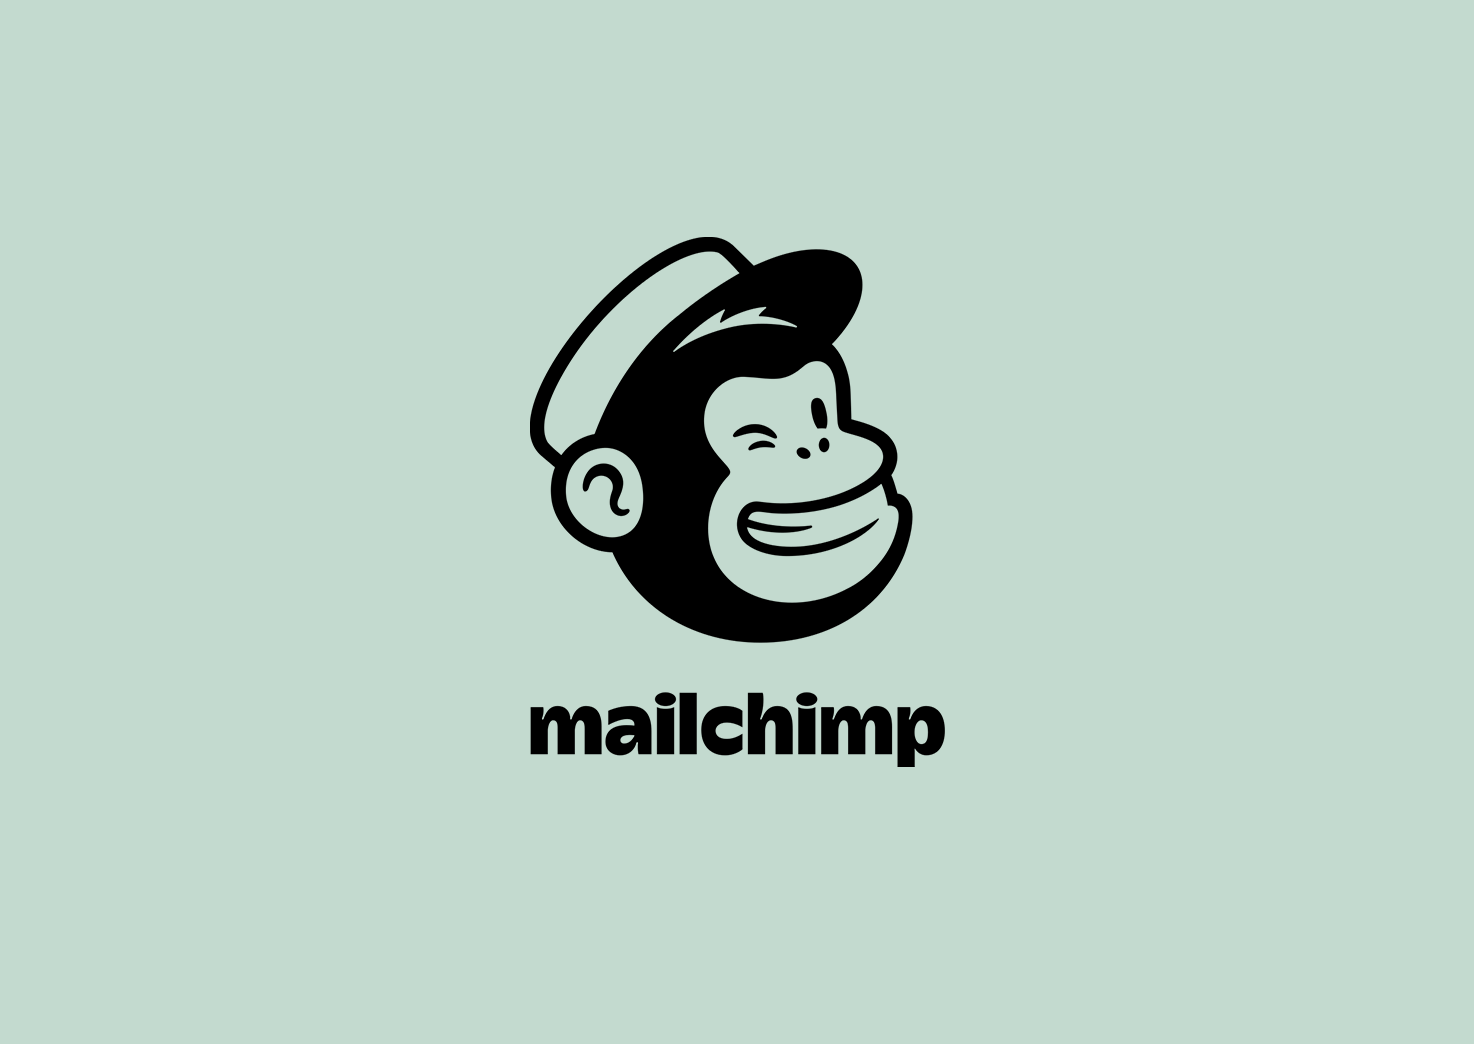 Black MailChimp logo on colored background